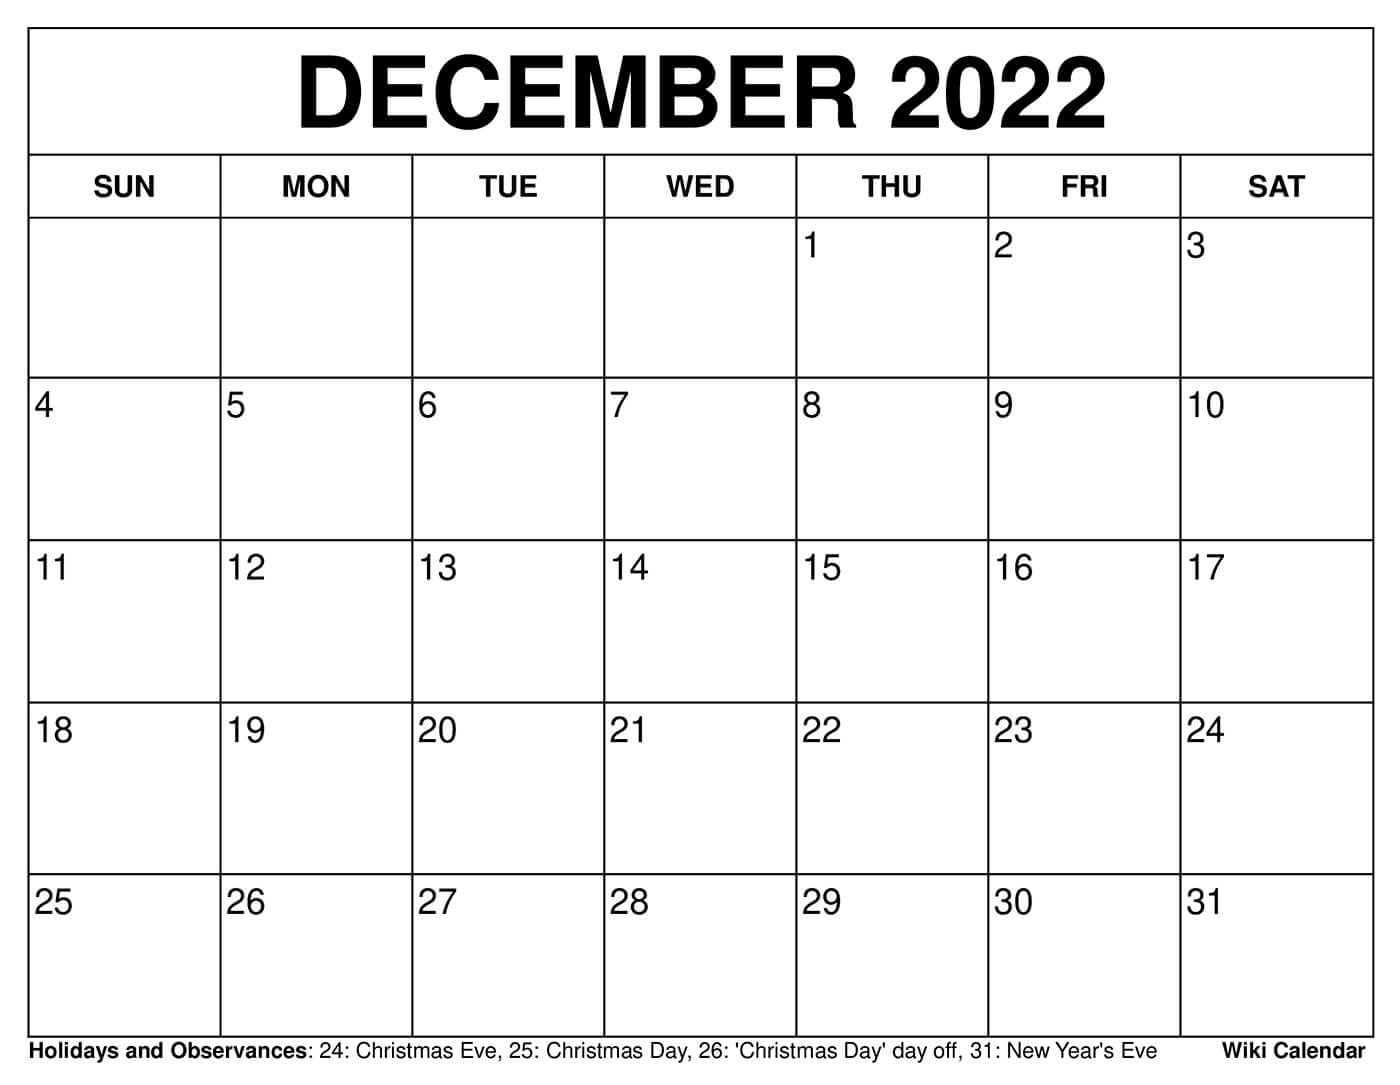 Dec 2022 Calendar Printable Free Printable December 2022 Calendars - Wiki Calendar